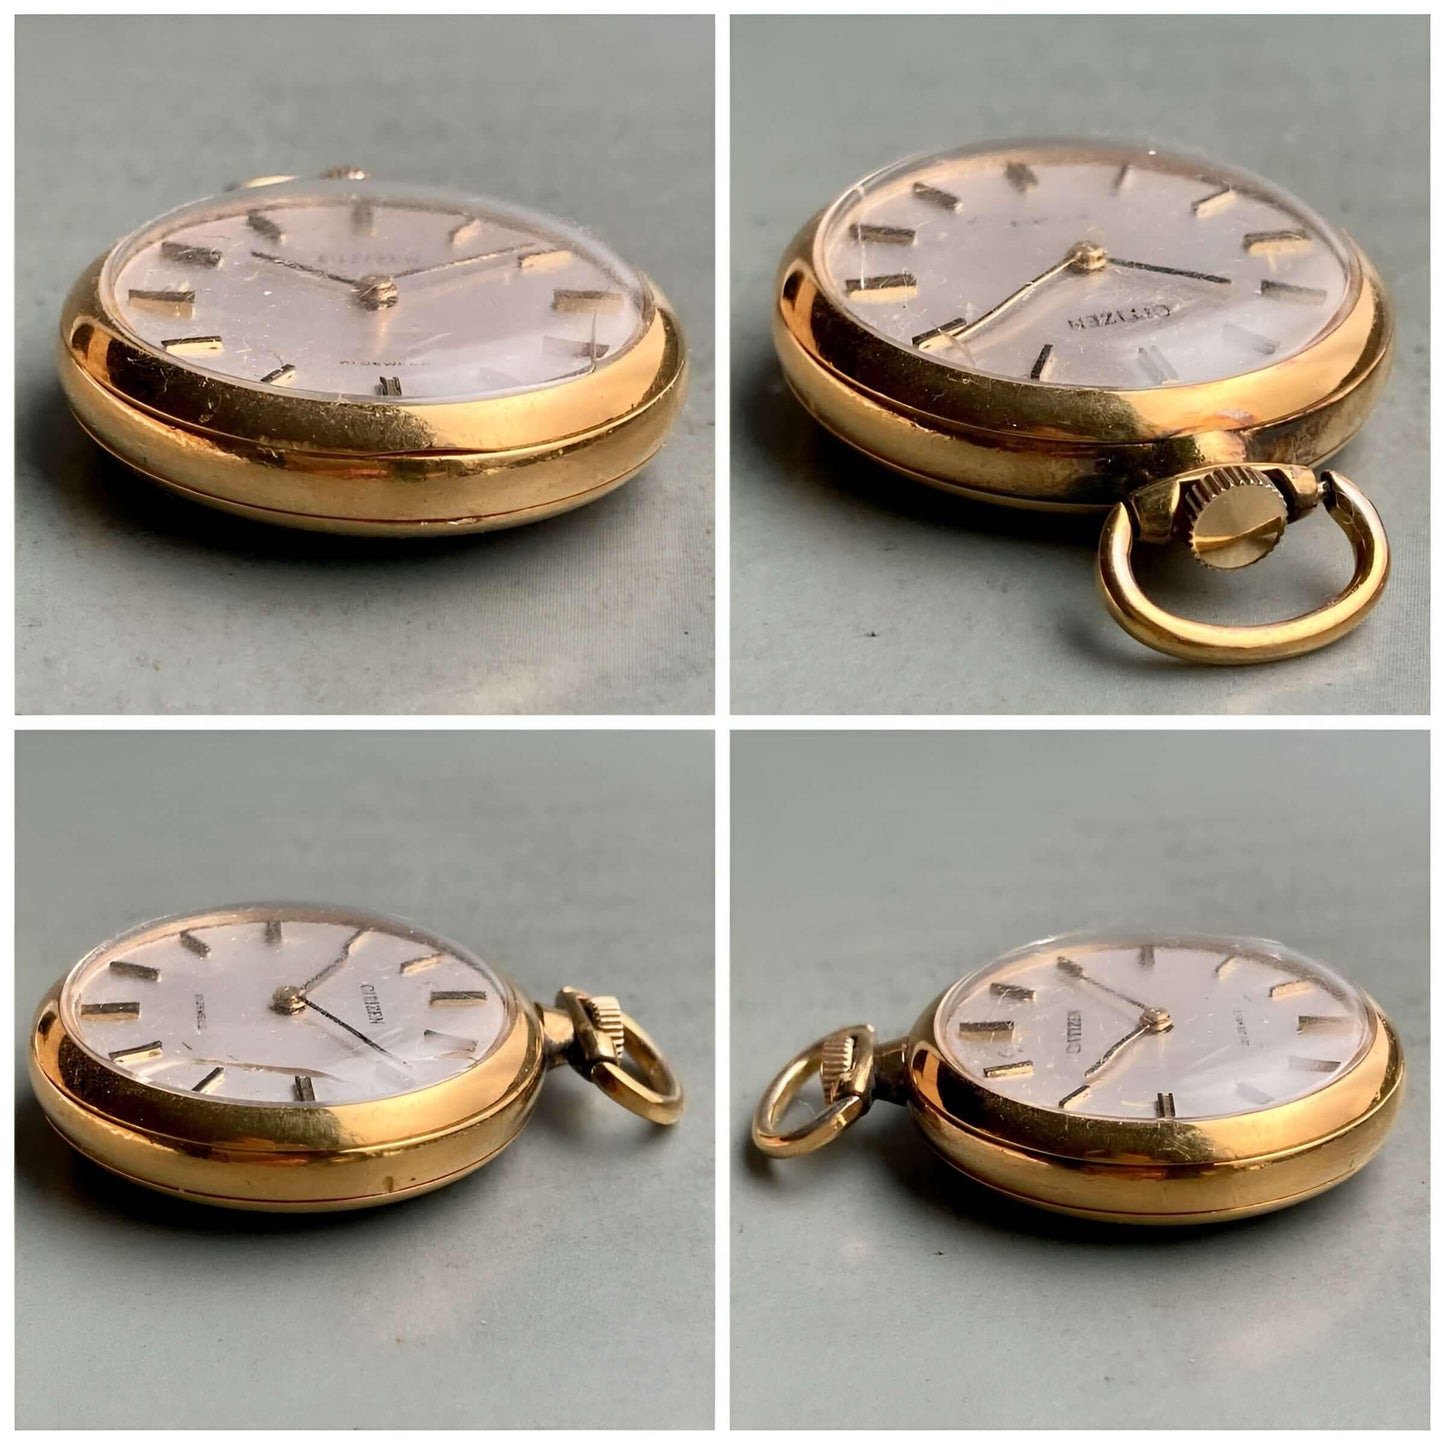 Citizen Pocket Watch Manual Antique Gold 28mm Vintage - Murphy Johnson Watches Co.